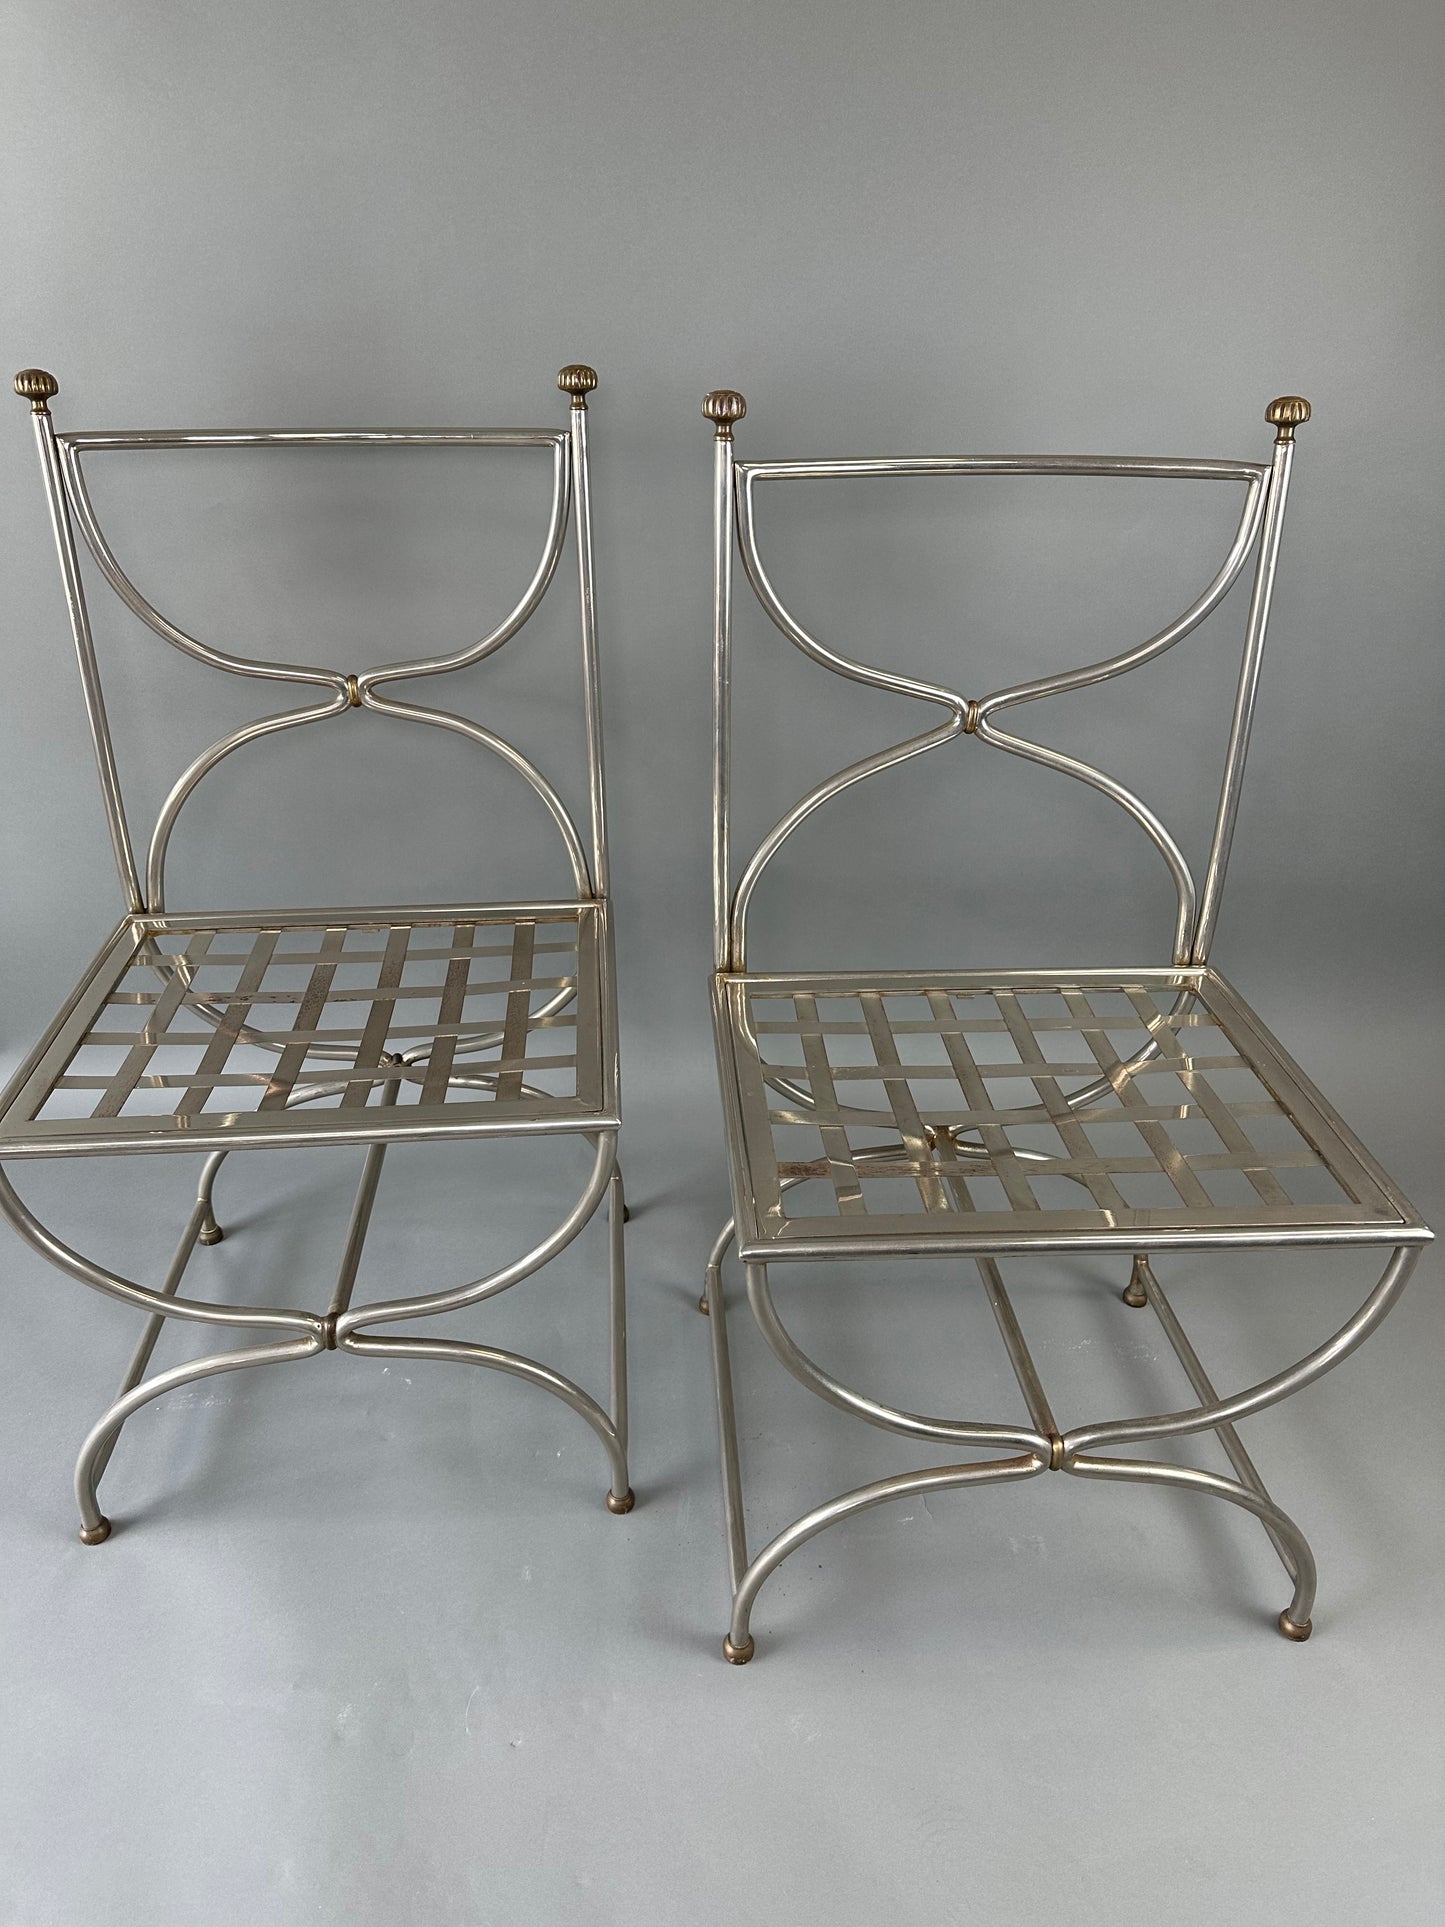 Midcentury Jansen Metal Chairs - Sold in Pairs